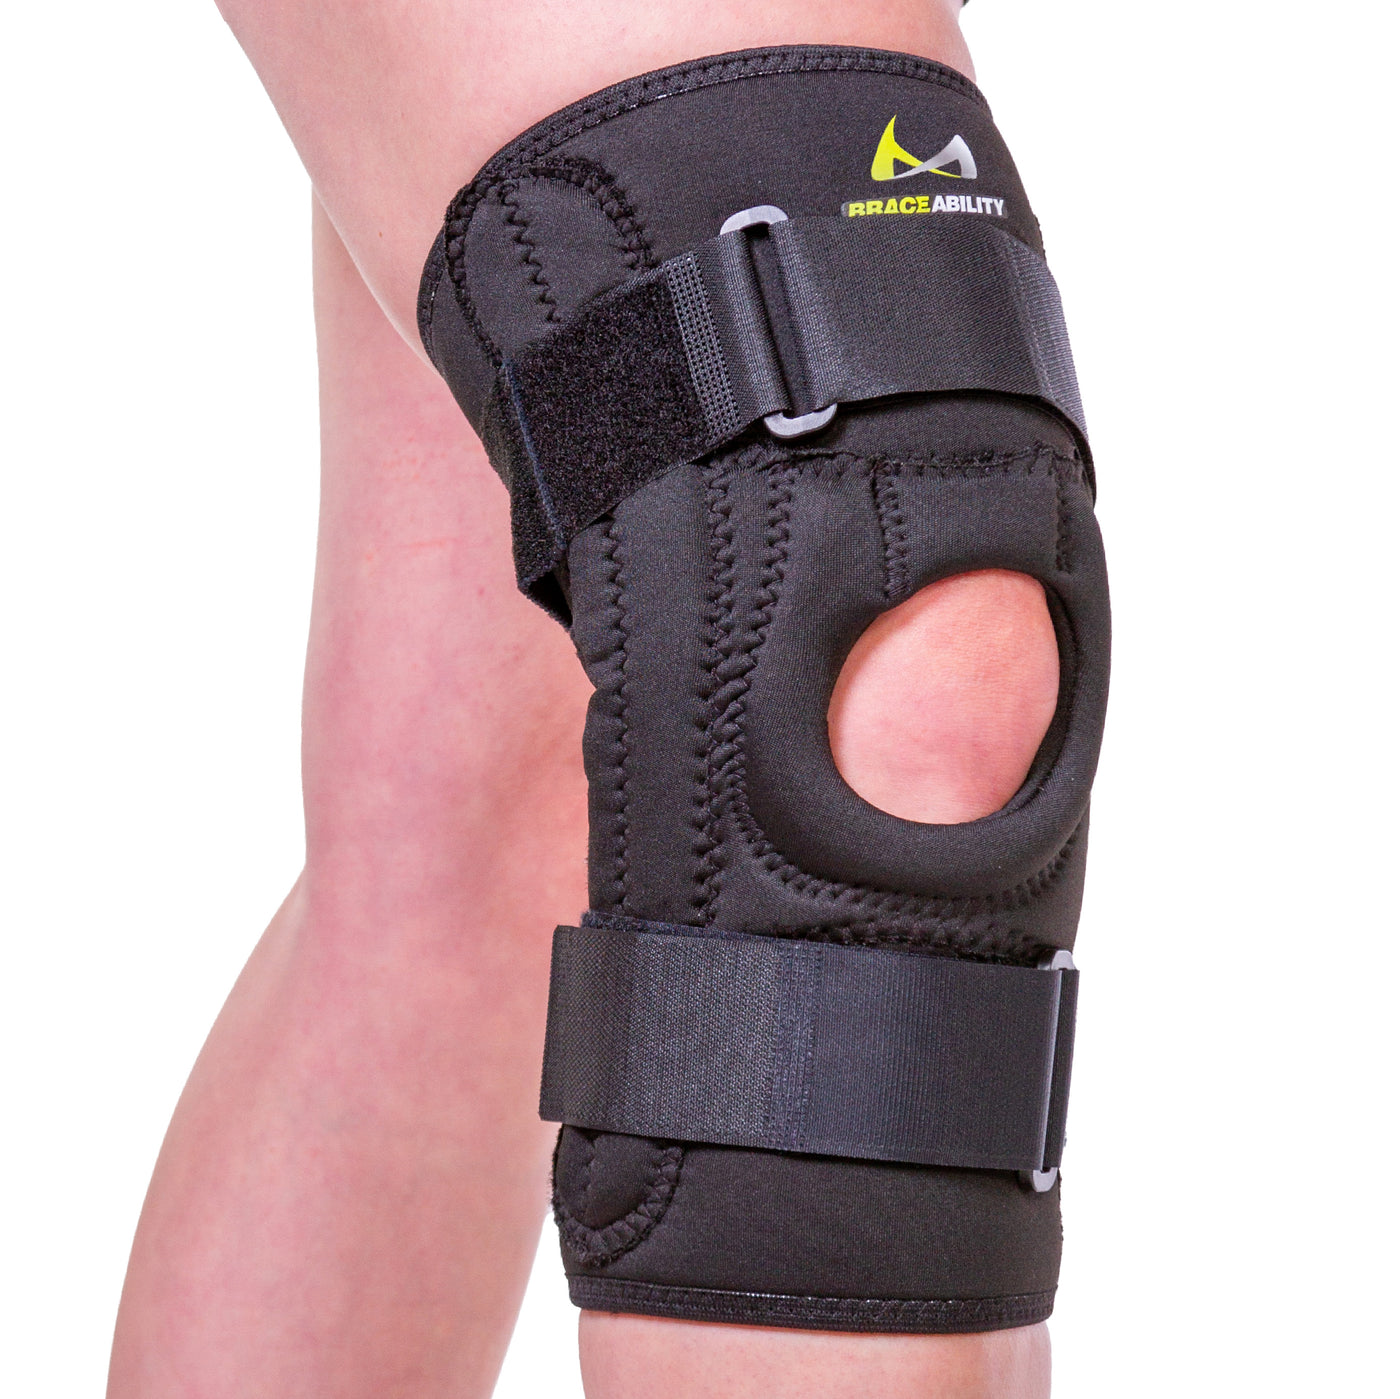 The BraceAbility U-shaped patella stabilizing knee brace is designed to prevent patella tracking